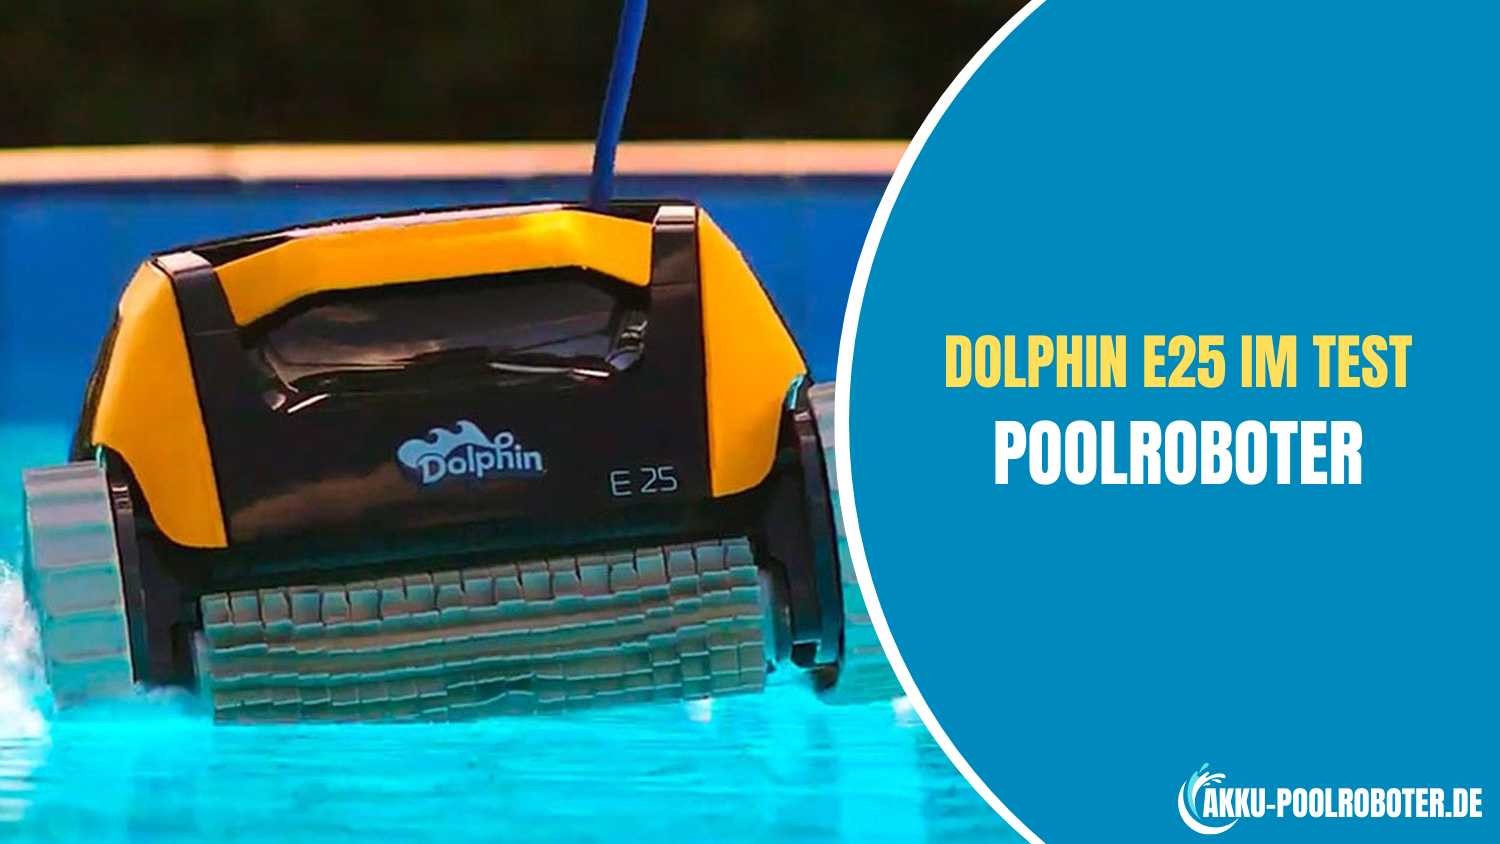 Dolphin E25 Poolroboter Test